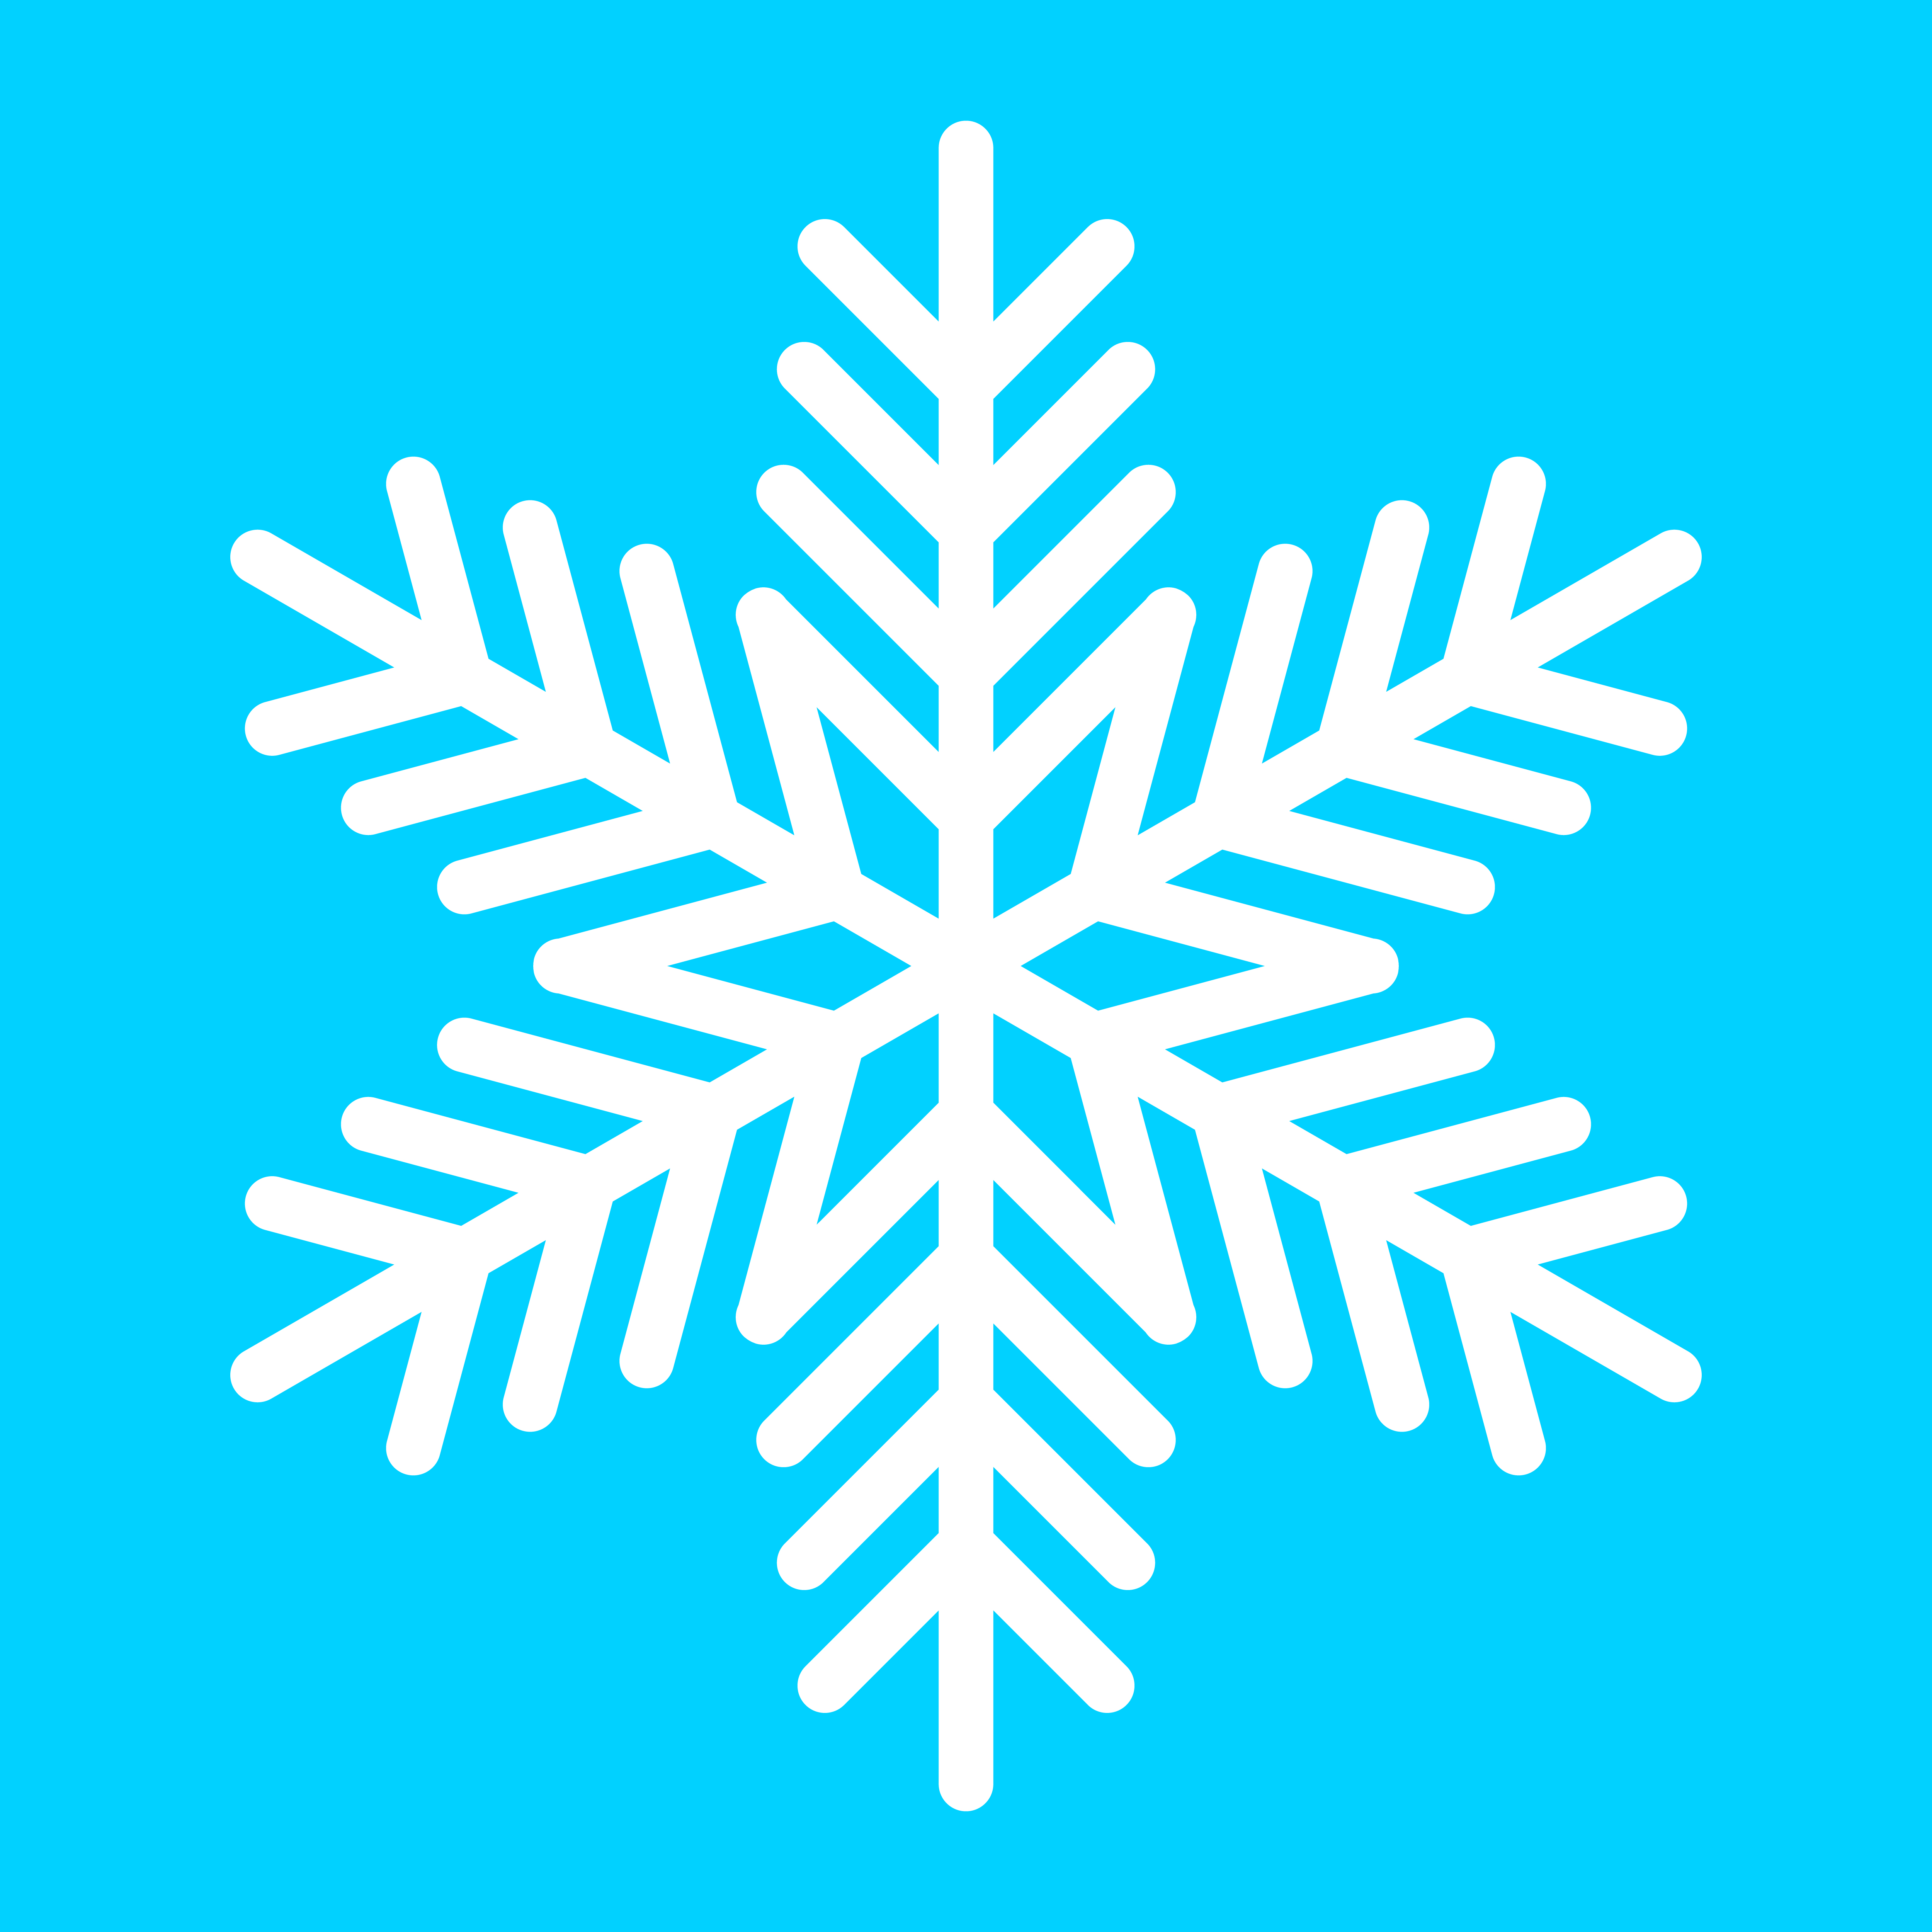 actionscript vector code for a snowflake